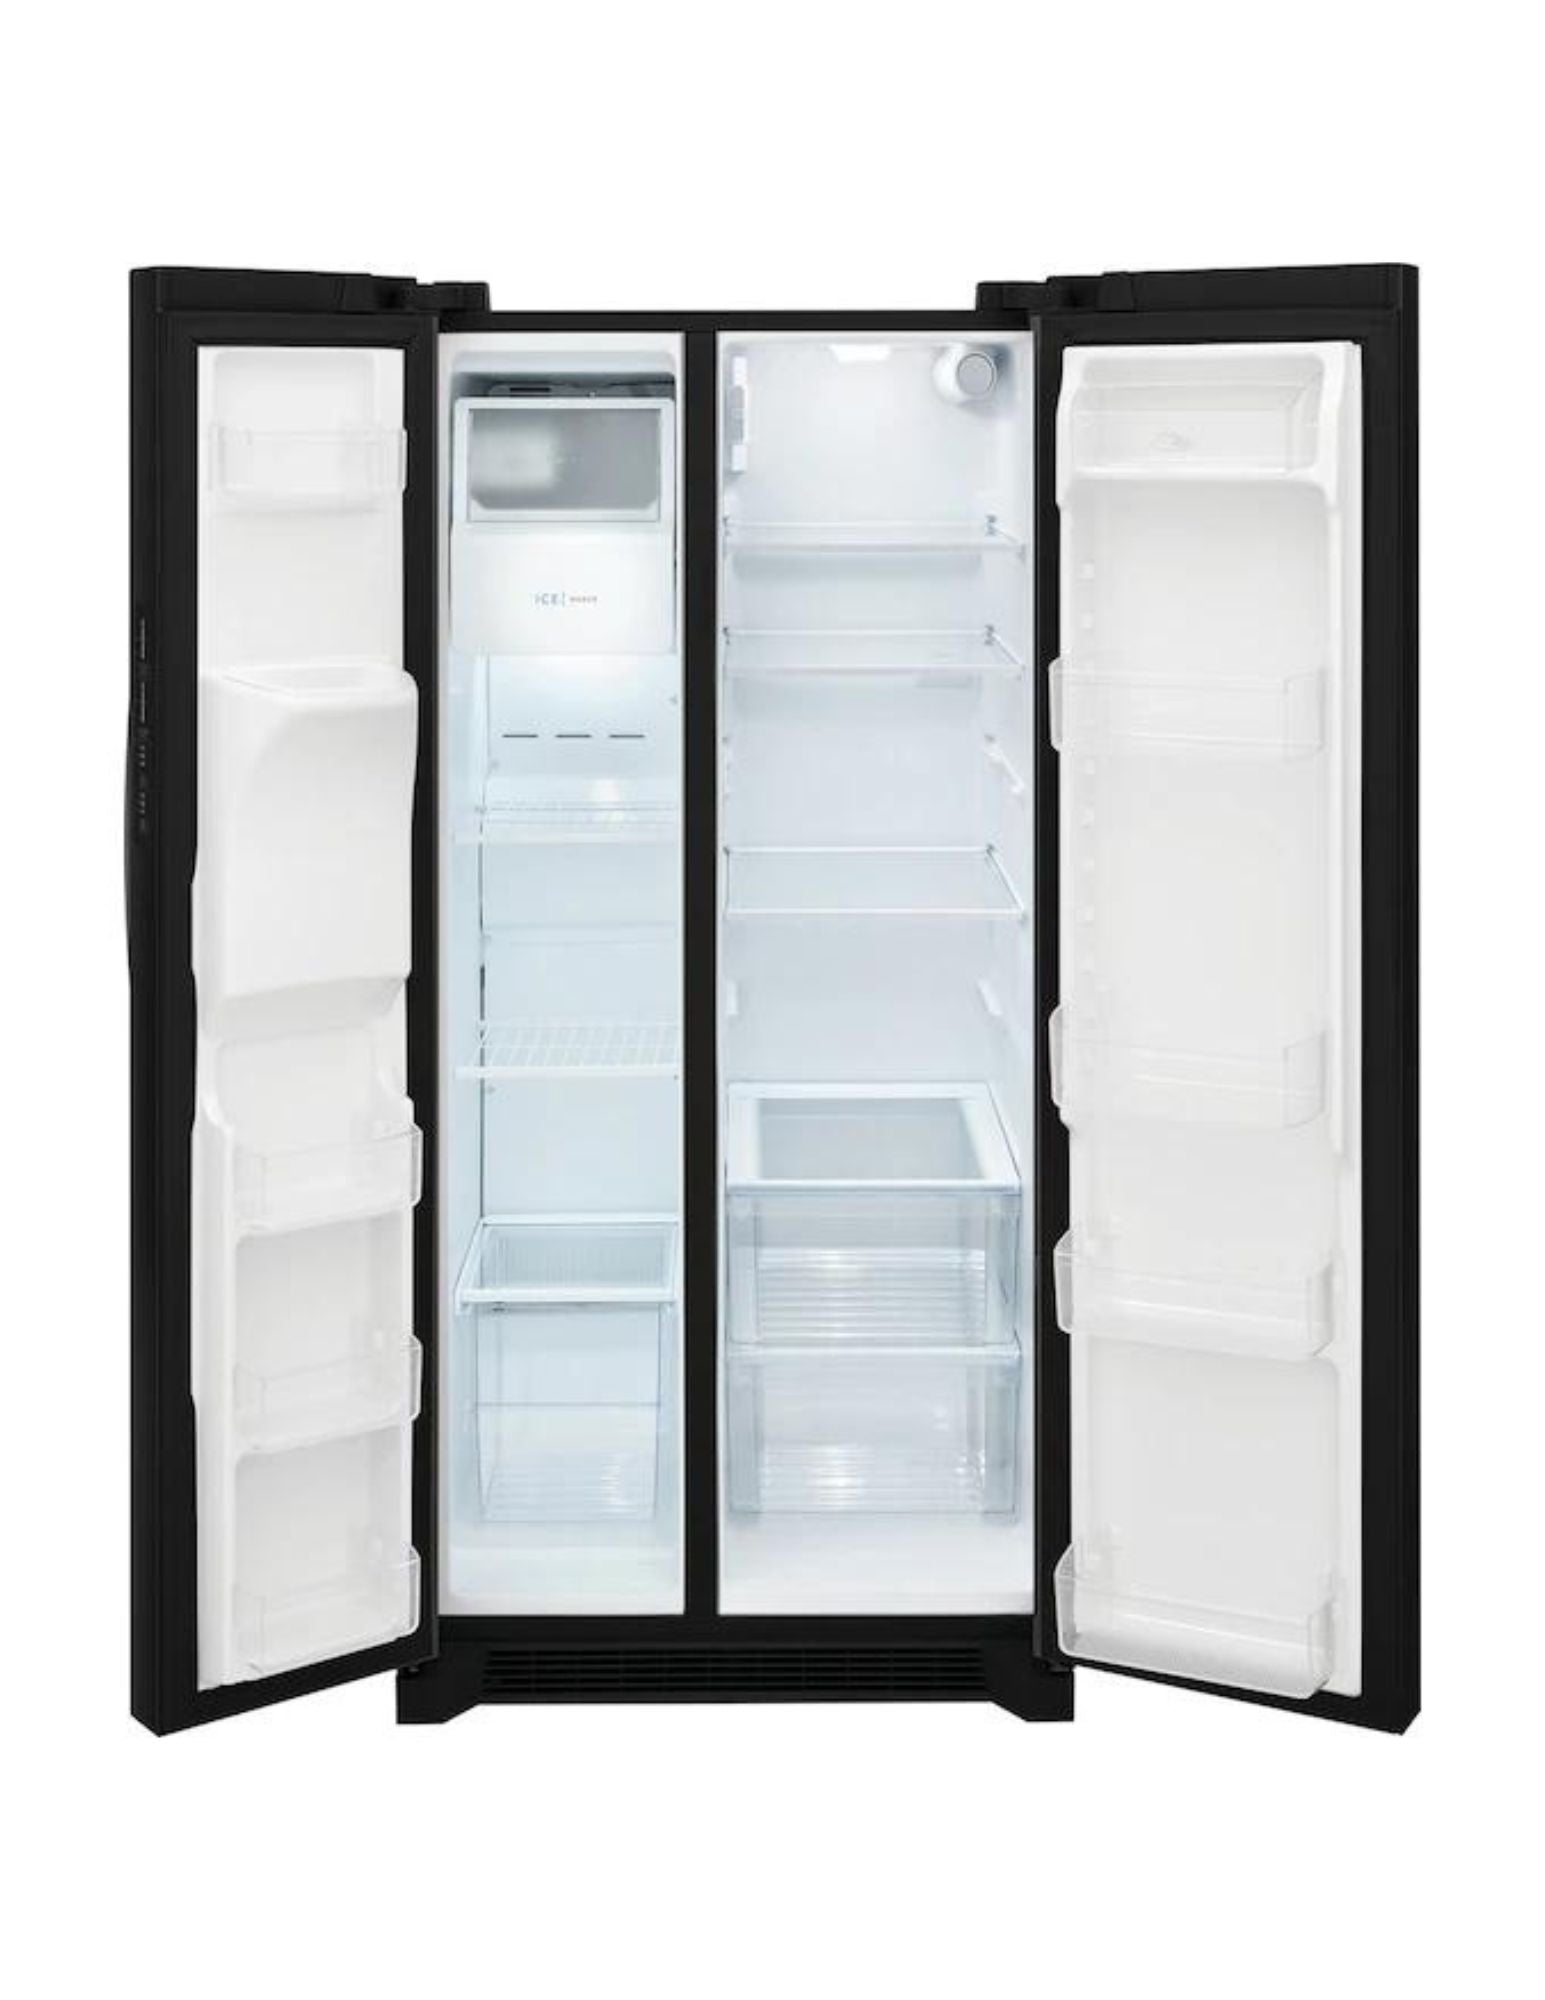 Frigidaire 26 Cu. Ft. Standard Depth Side by Side Refrigerator